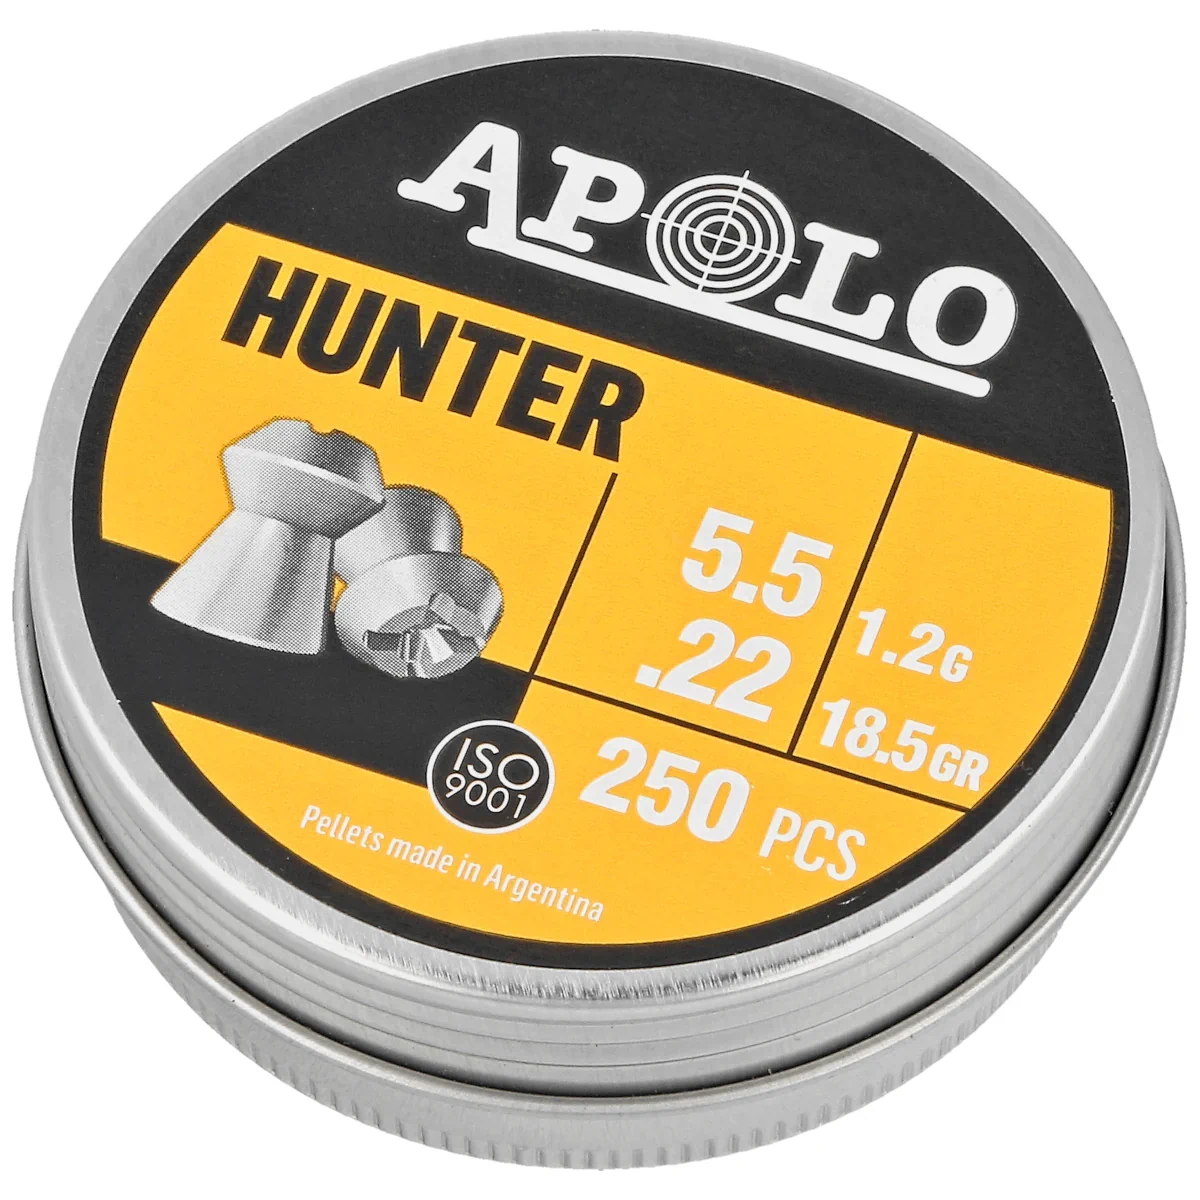 Śrut Apolo Hunter 5.5 mm, 250 szt. 1.20g/18.5gr (19971)